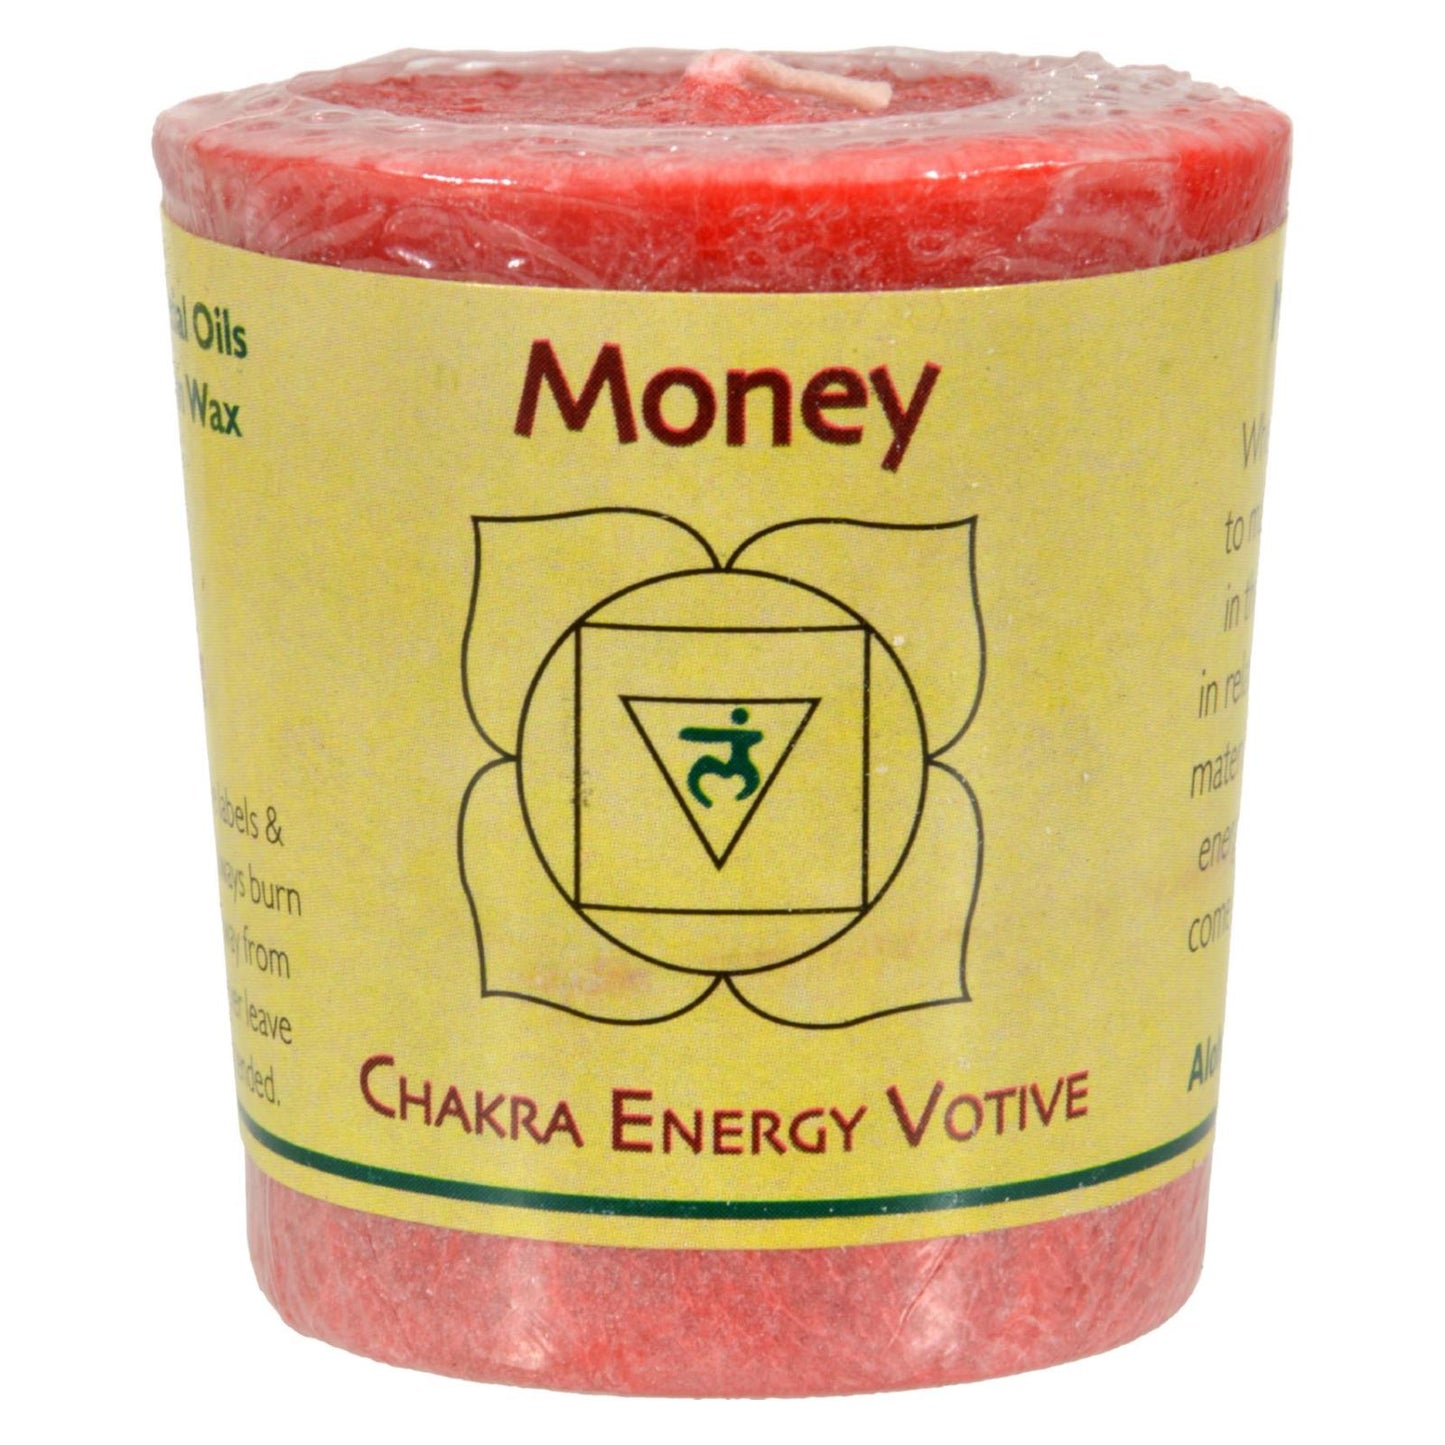 Chakra Votive Candle - Money | Aloha Bay | Case